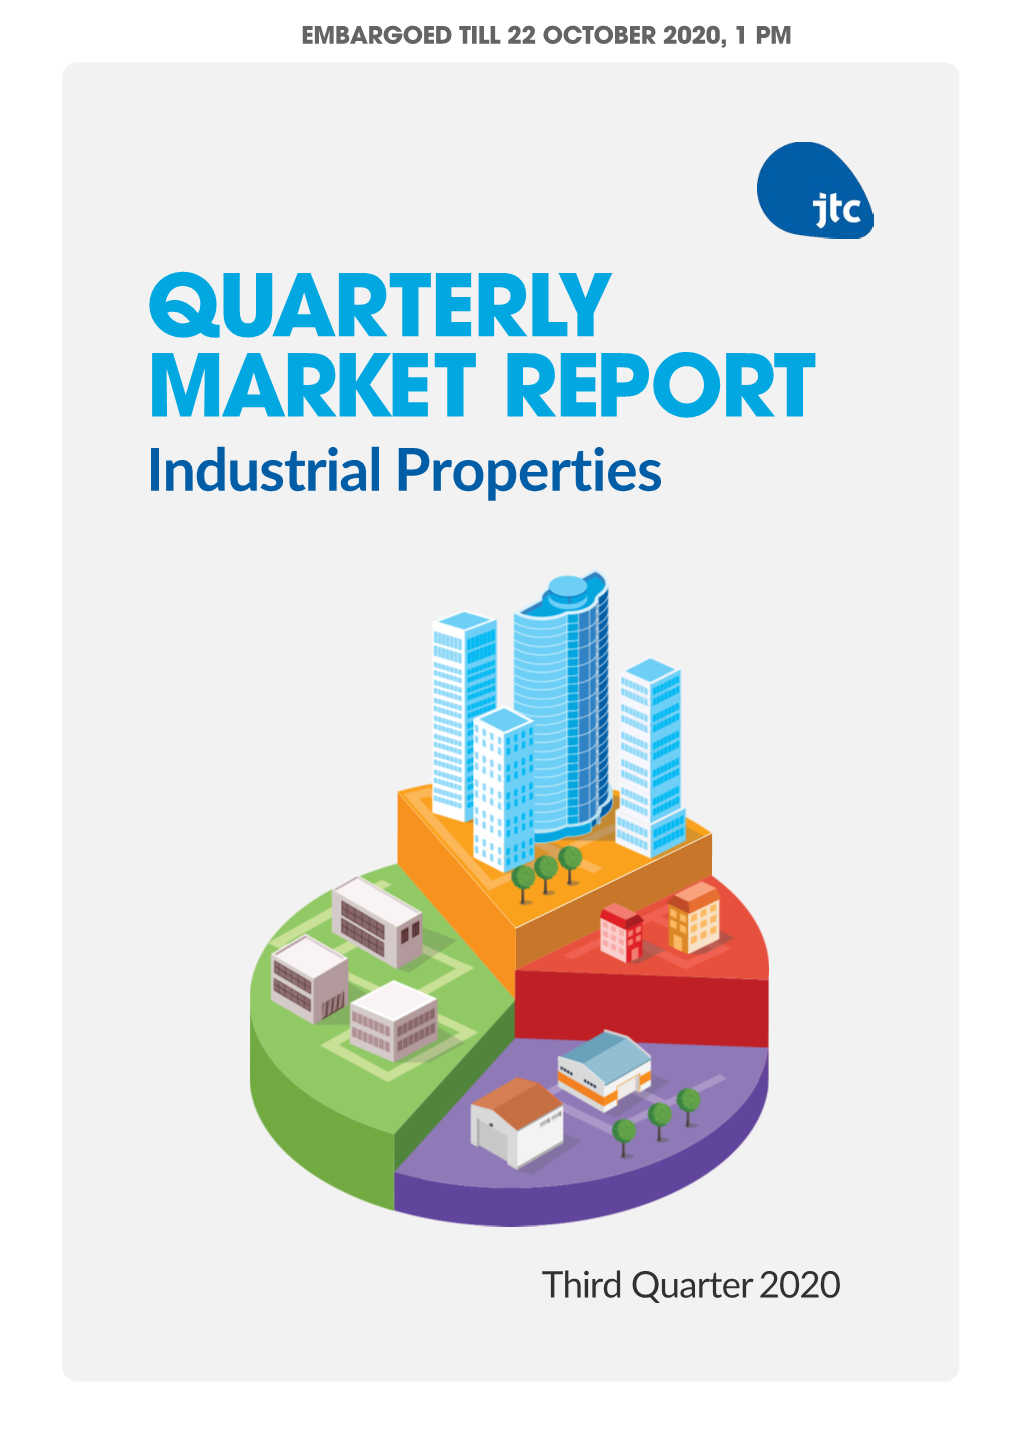 JTC Quarterly Market Report 3Q2020 Embargoed.Pdf